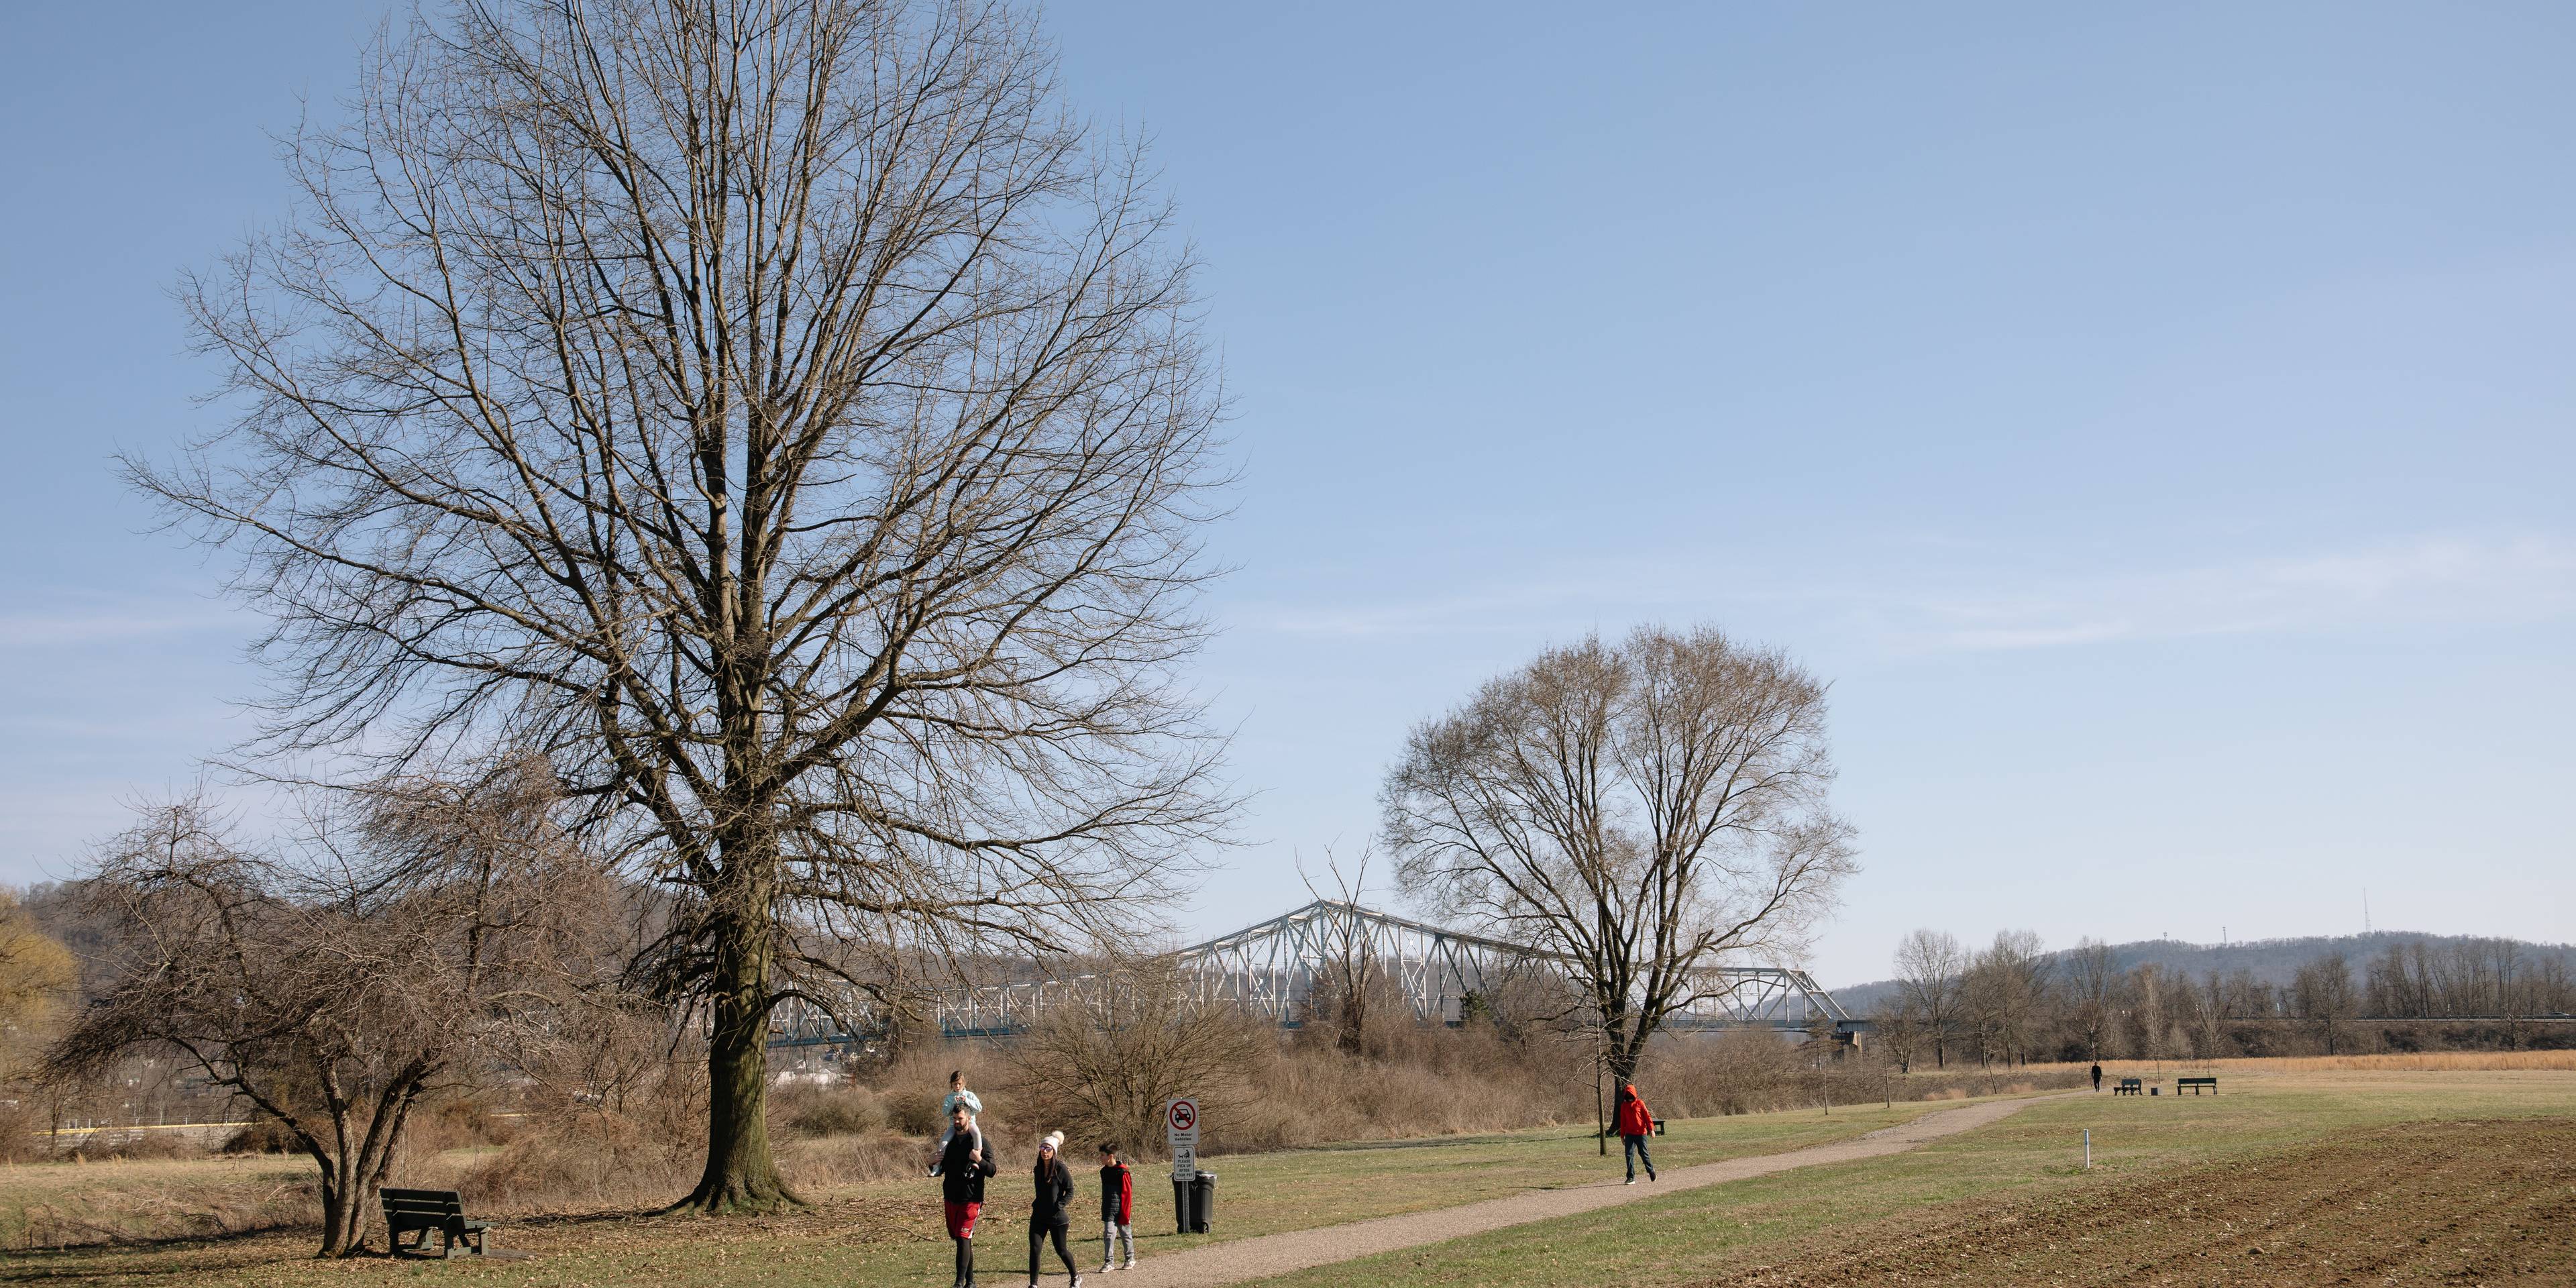 Family walking in rural environment in the Appalachian region, Ohio.